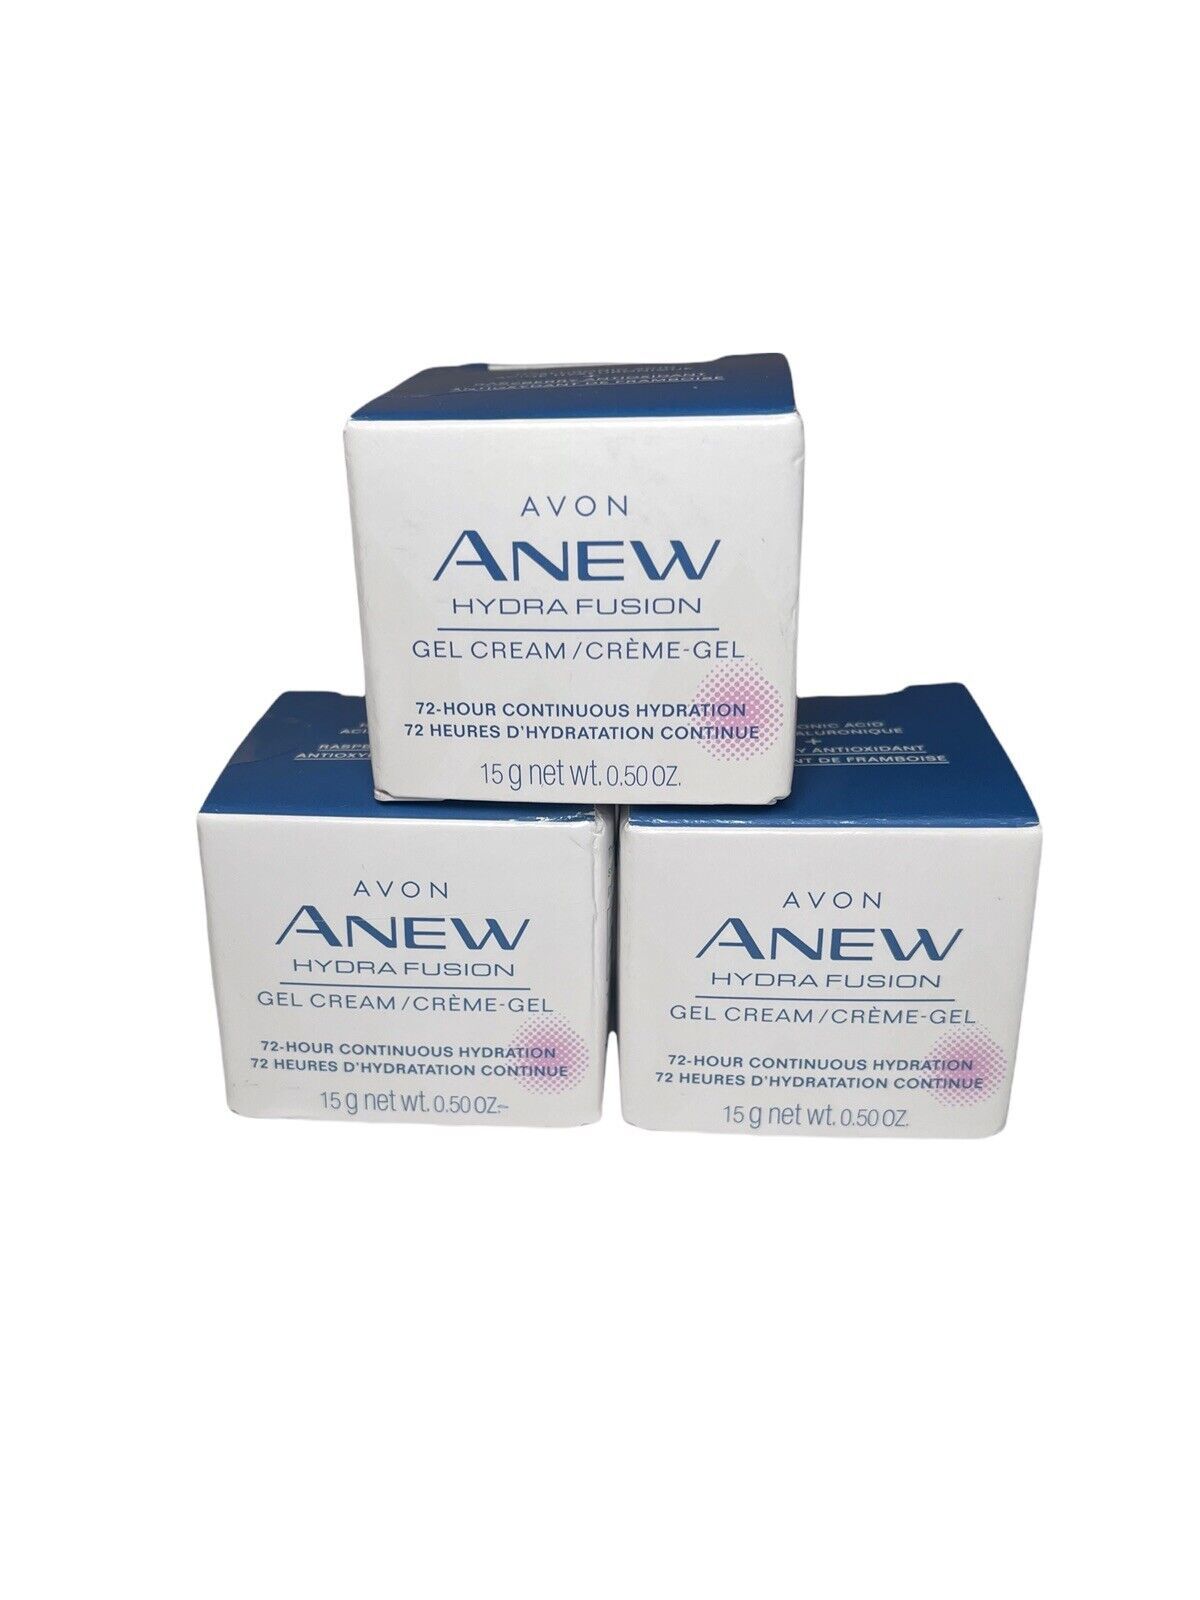 Avon ANEW HYDRA FUSION Gel Cream 0.5oz Travel Size, 3-pack.   72-Hour Hydration - $18.95